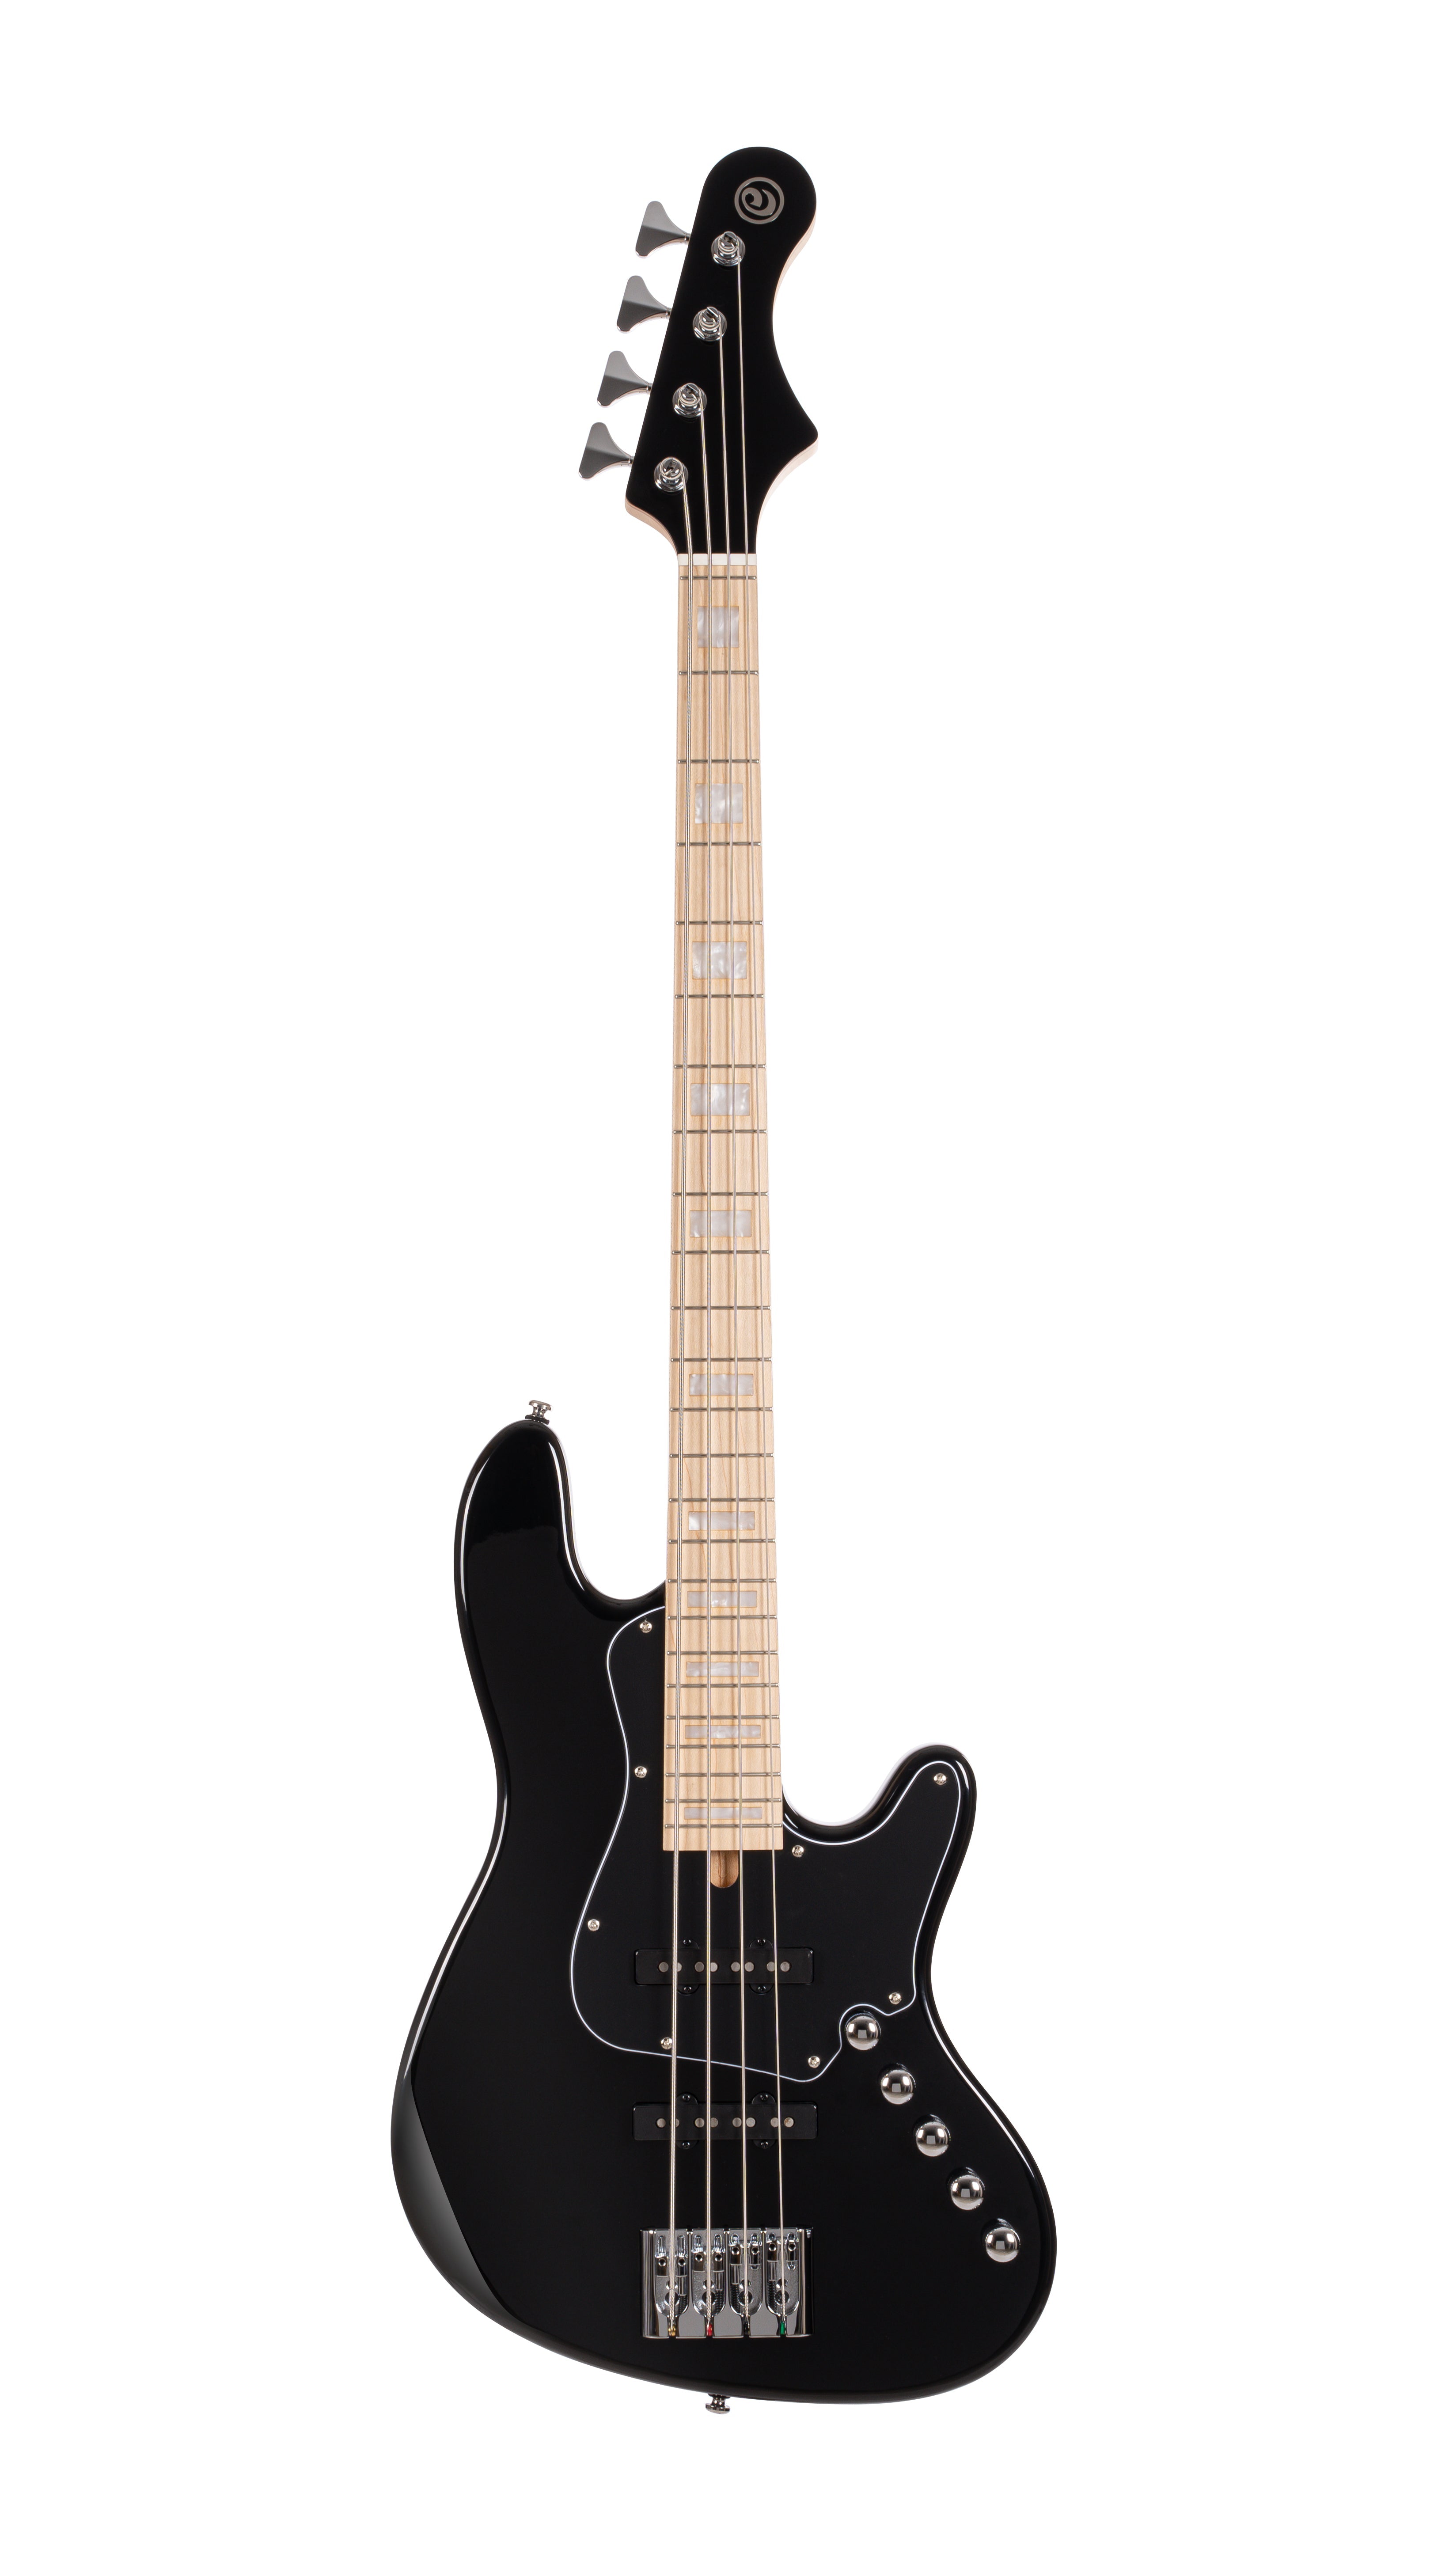 Cort NJS-4 BK w/case, Bass Guitar for sale at Richards Guitars.